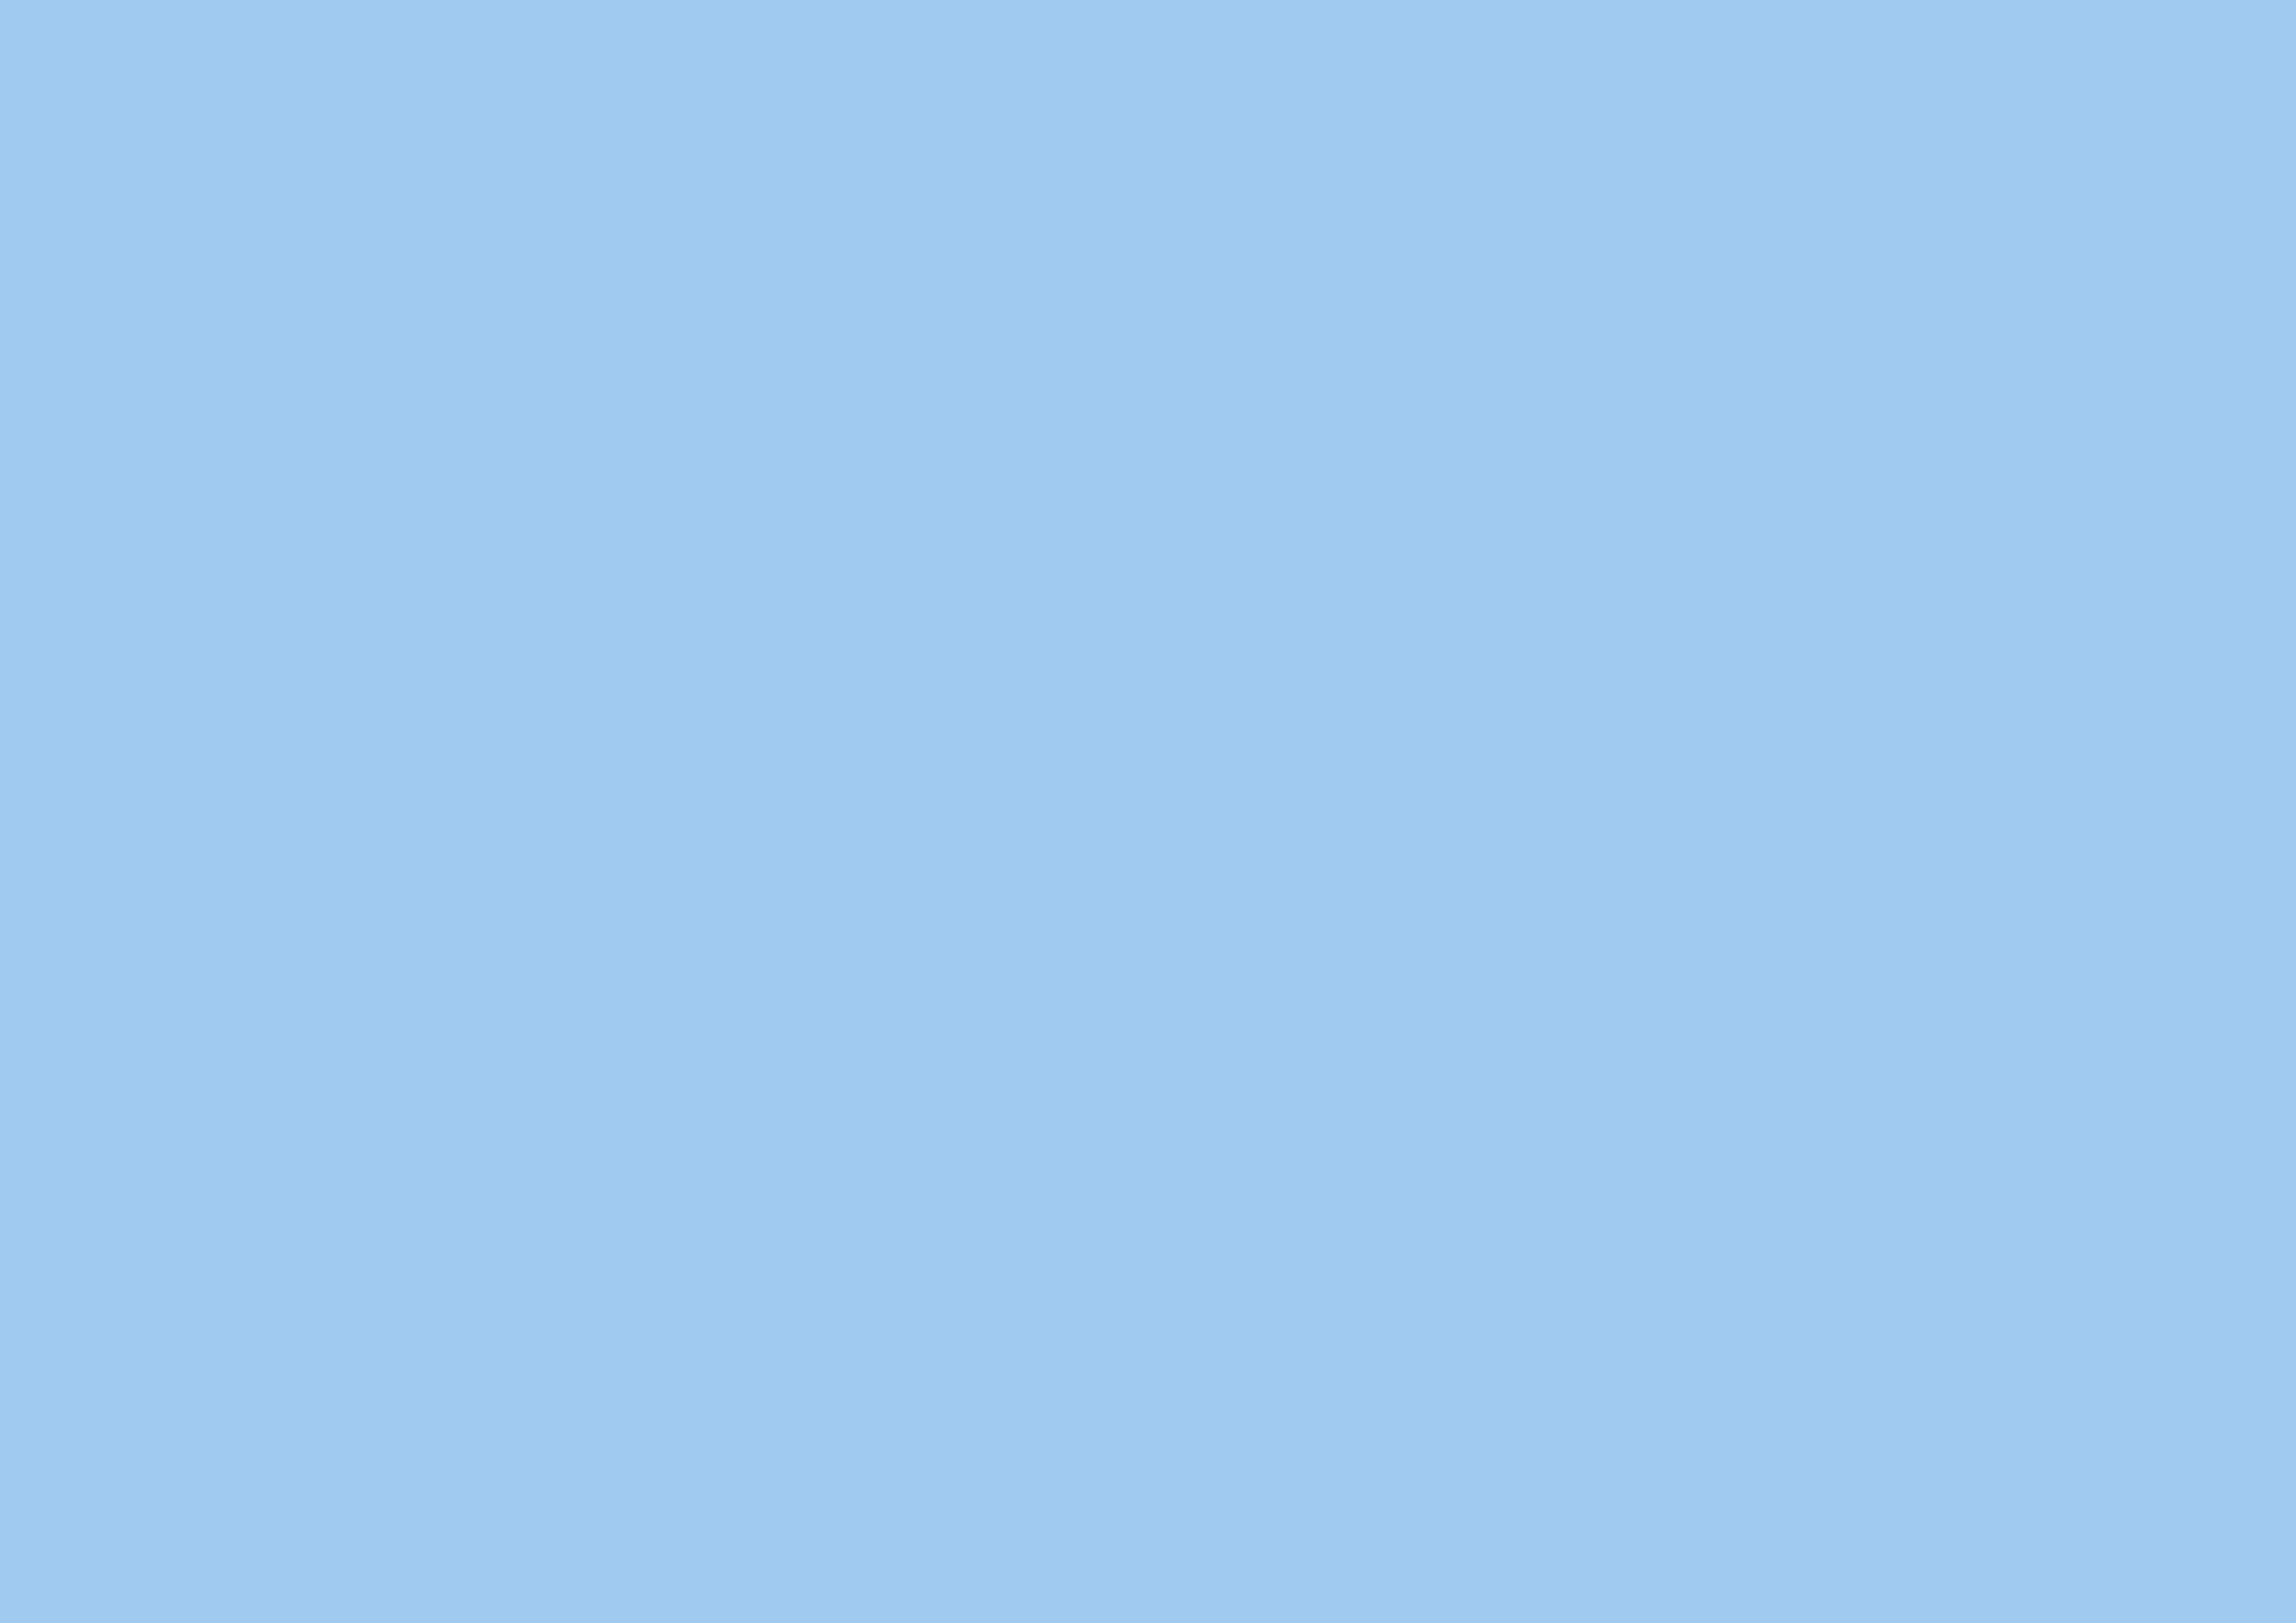 Featured image of post Baby Blue Solid Light Blue Background - Blue com imagens papel de parede azul para iphone papeis.